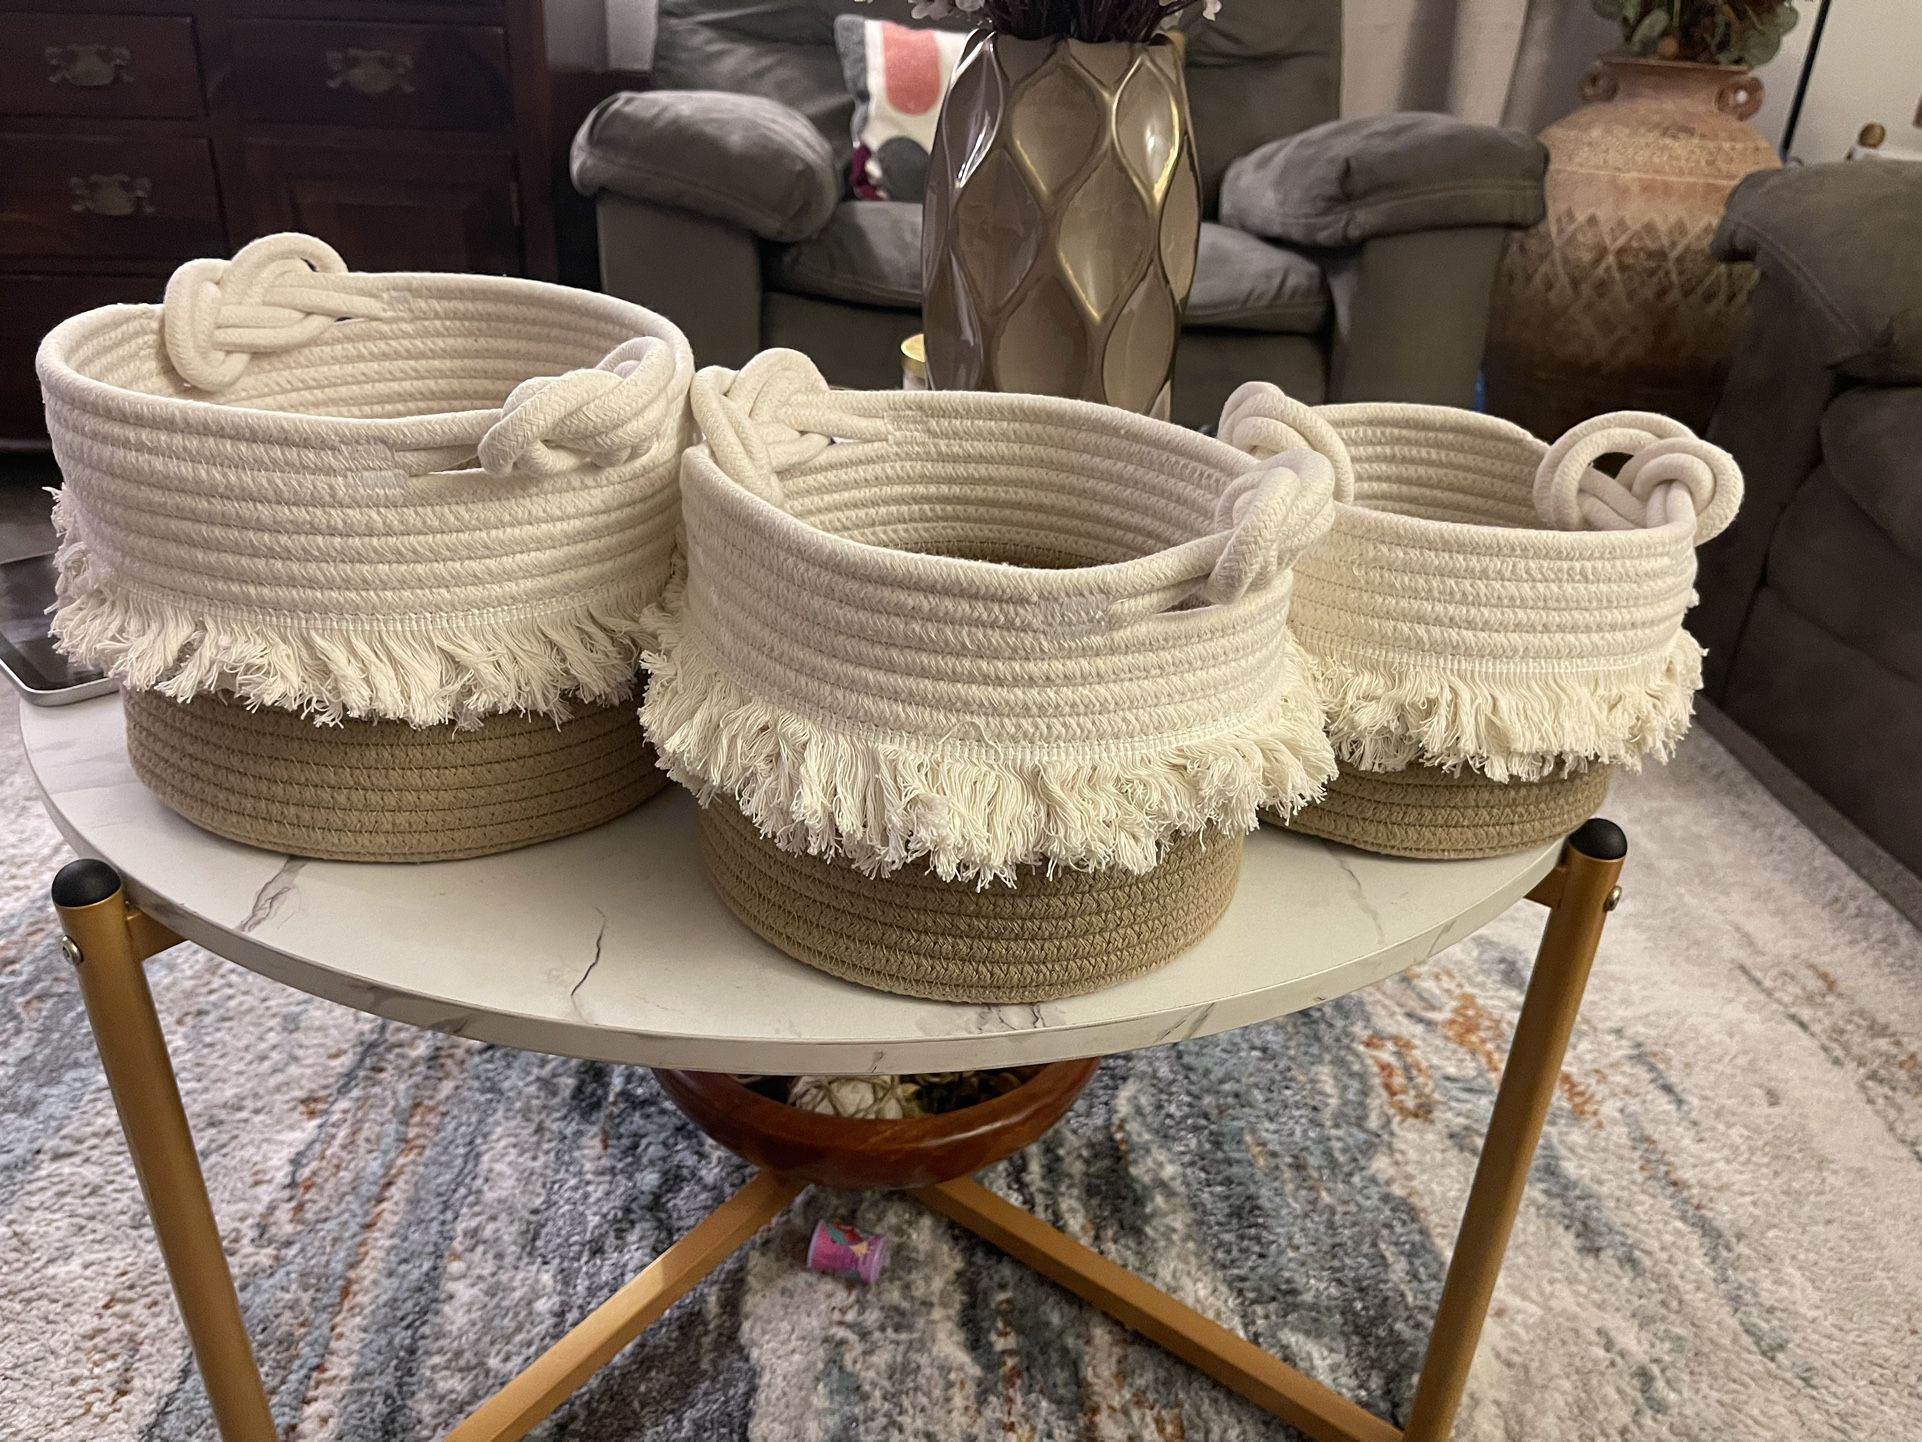 3-piece Of Basket Set Rope Woven Organizing